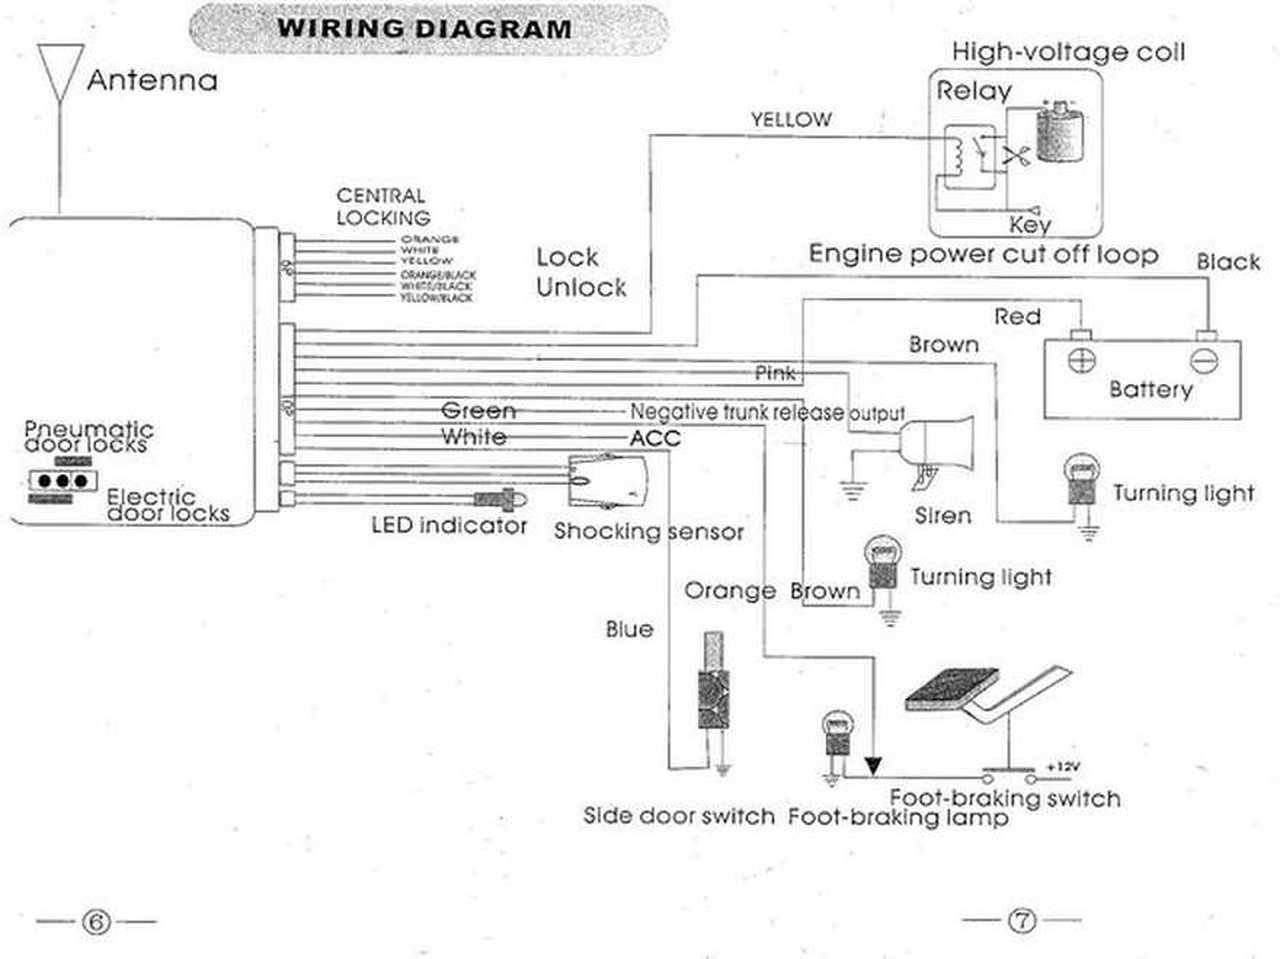 Remote Central Locking Wiring Diagram 1